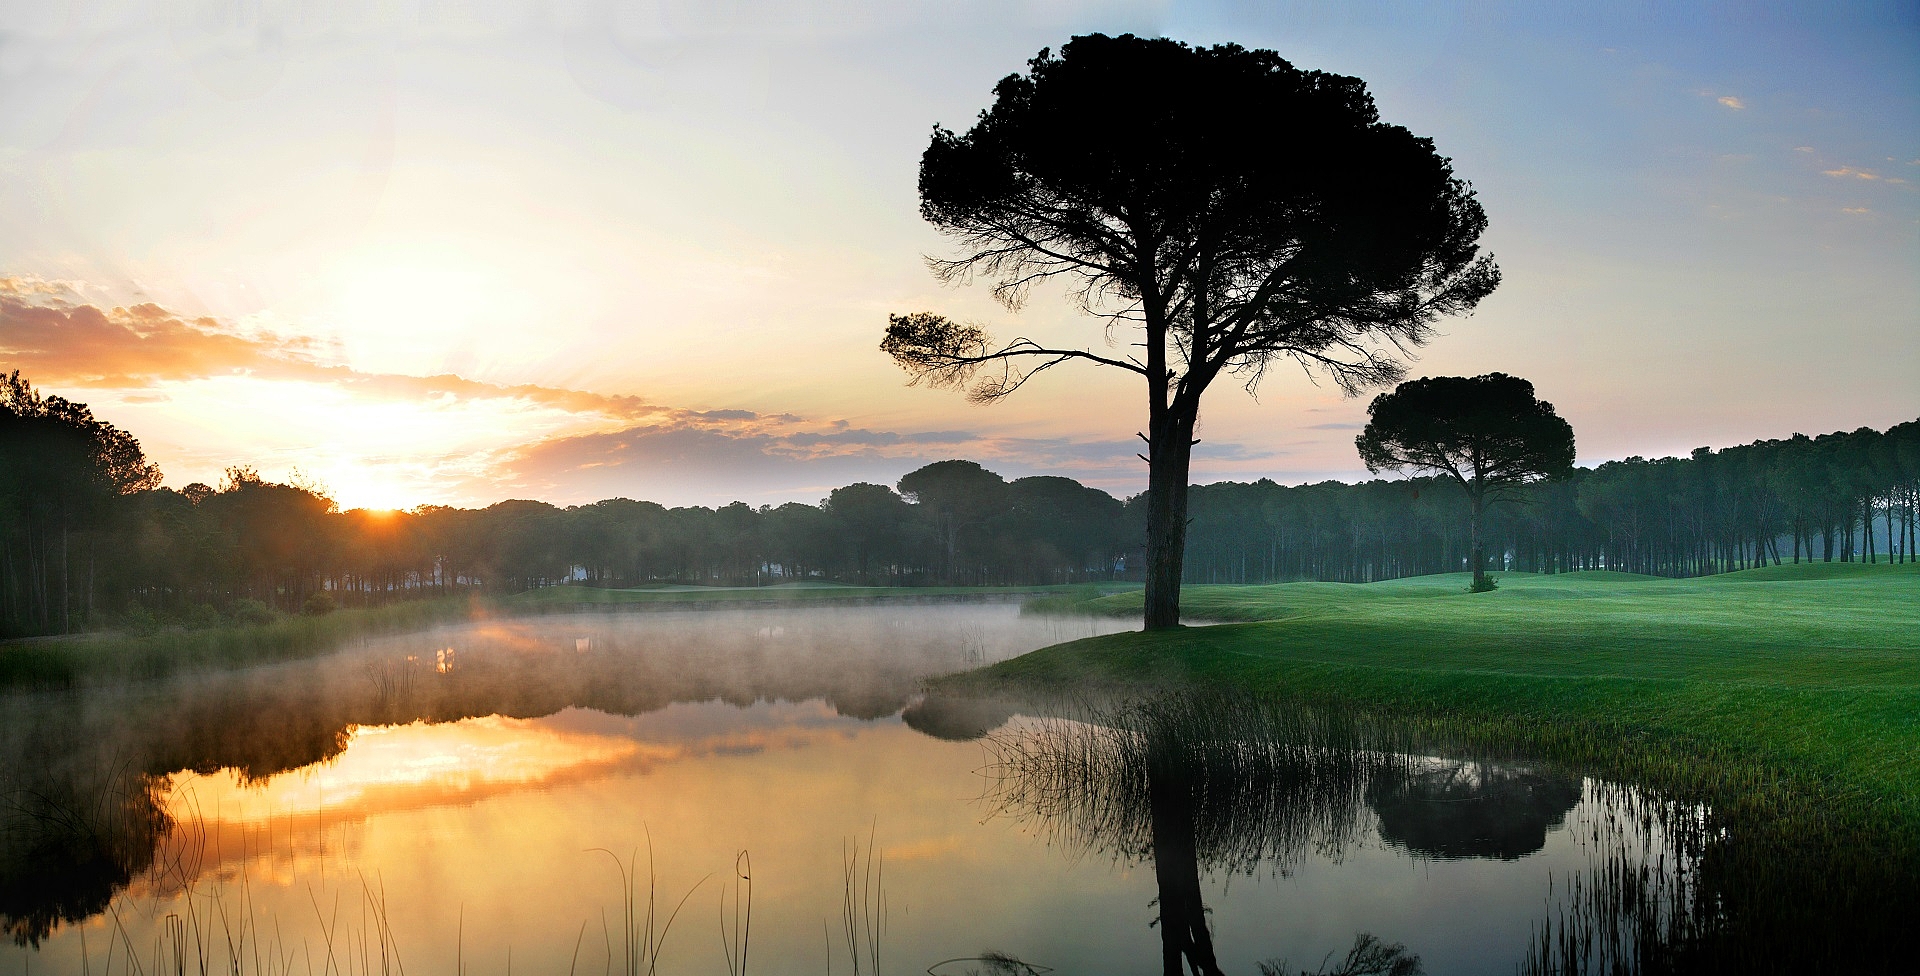 Montgomerie Maxx Royal Golf Club | Golf i Belek